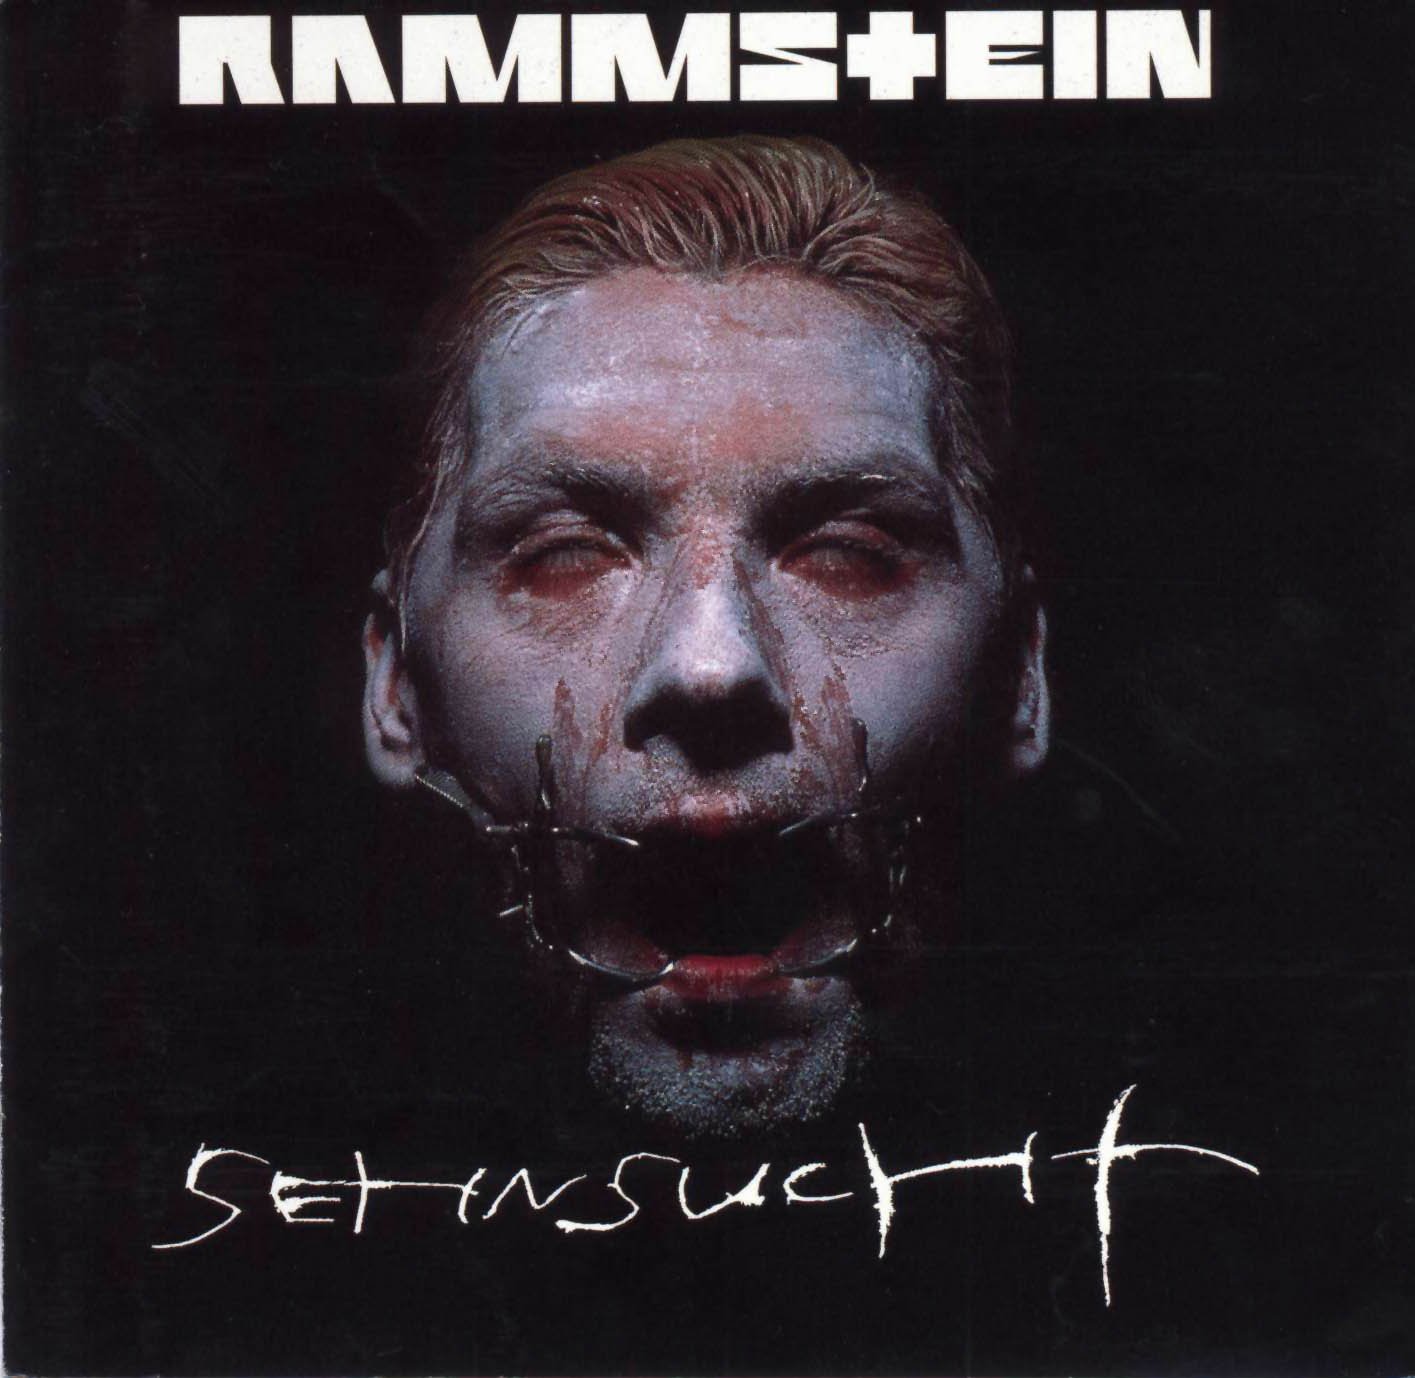 Rammstein - Tier